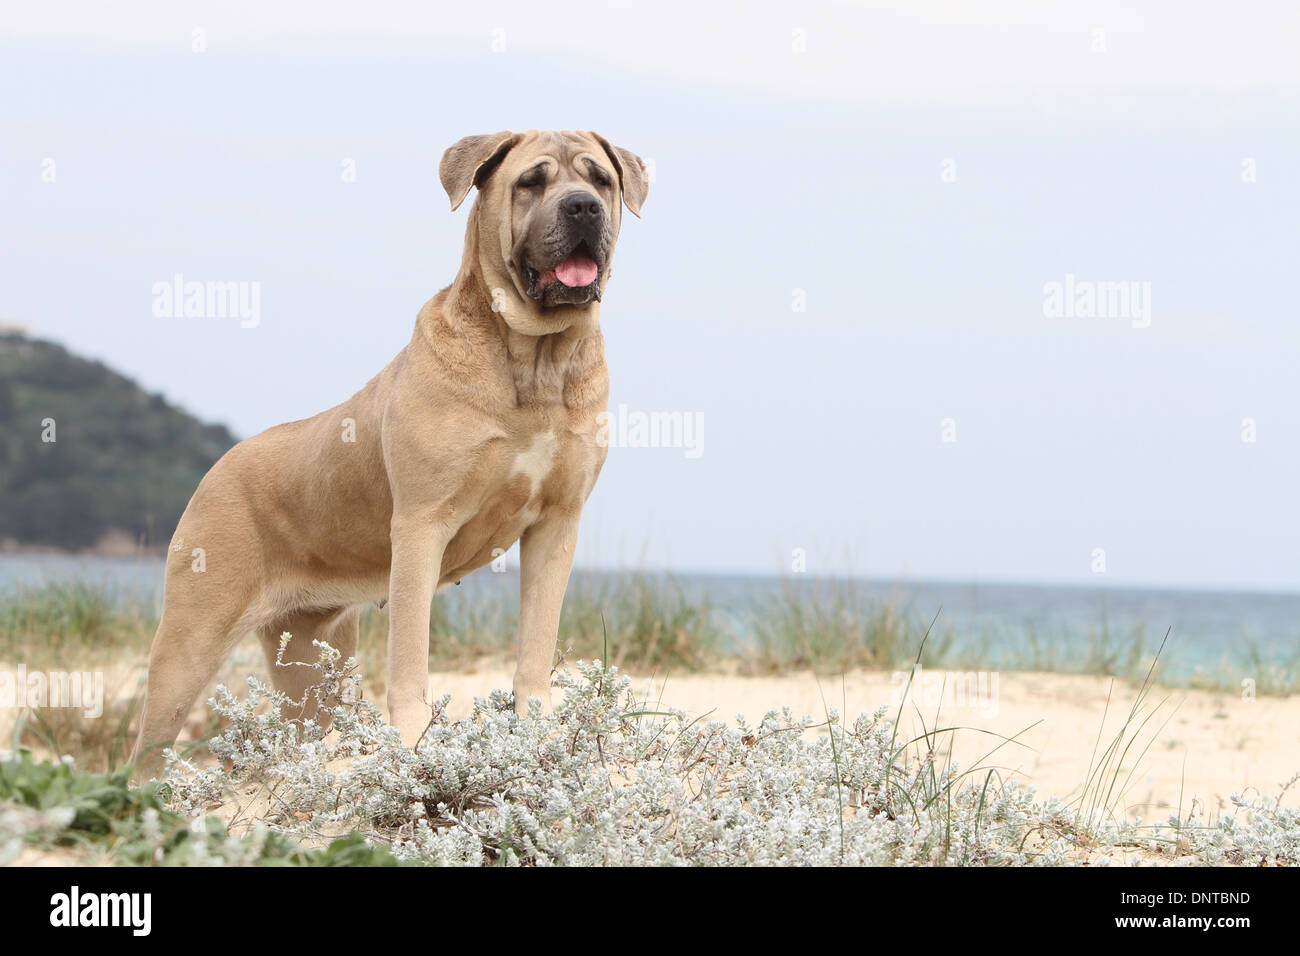 Dog Cane Corso Italian Mastiff Adult Standing On The